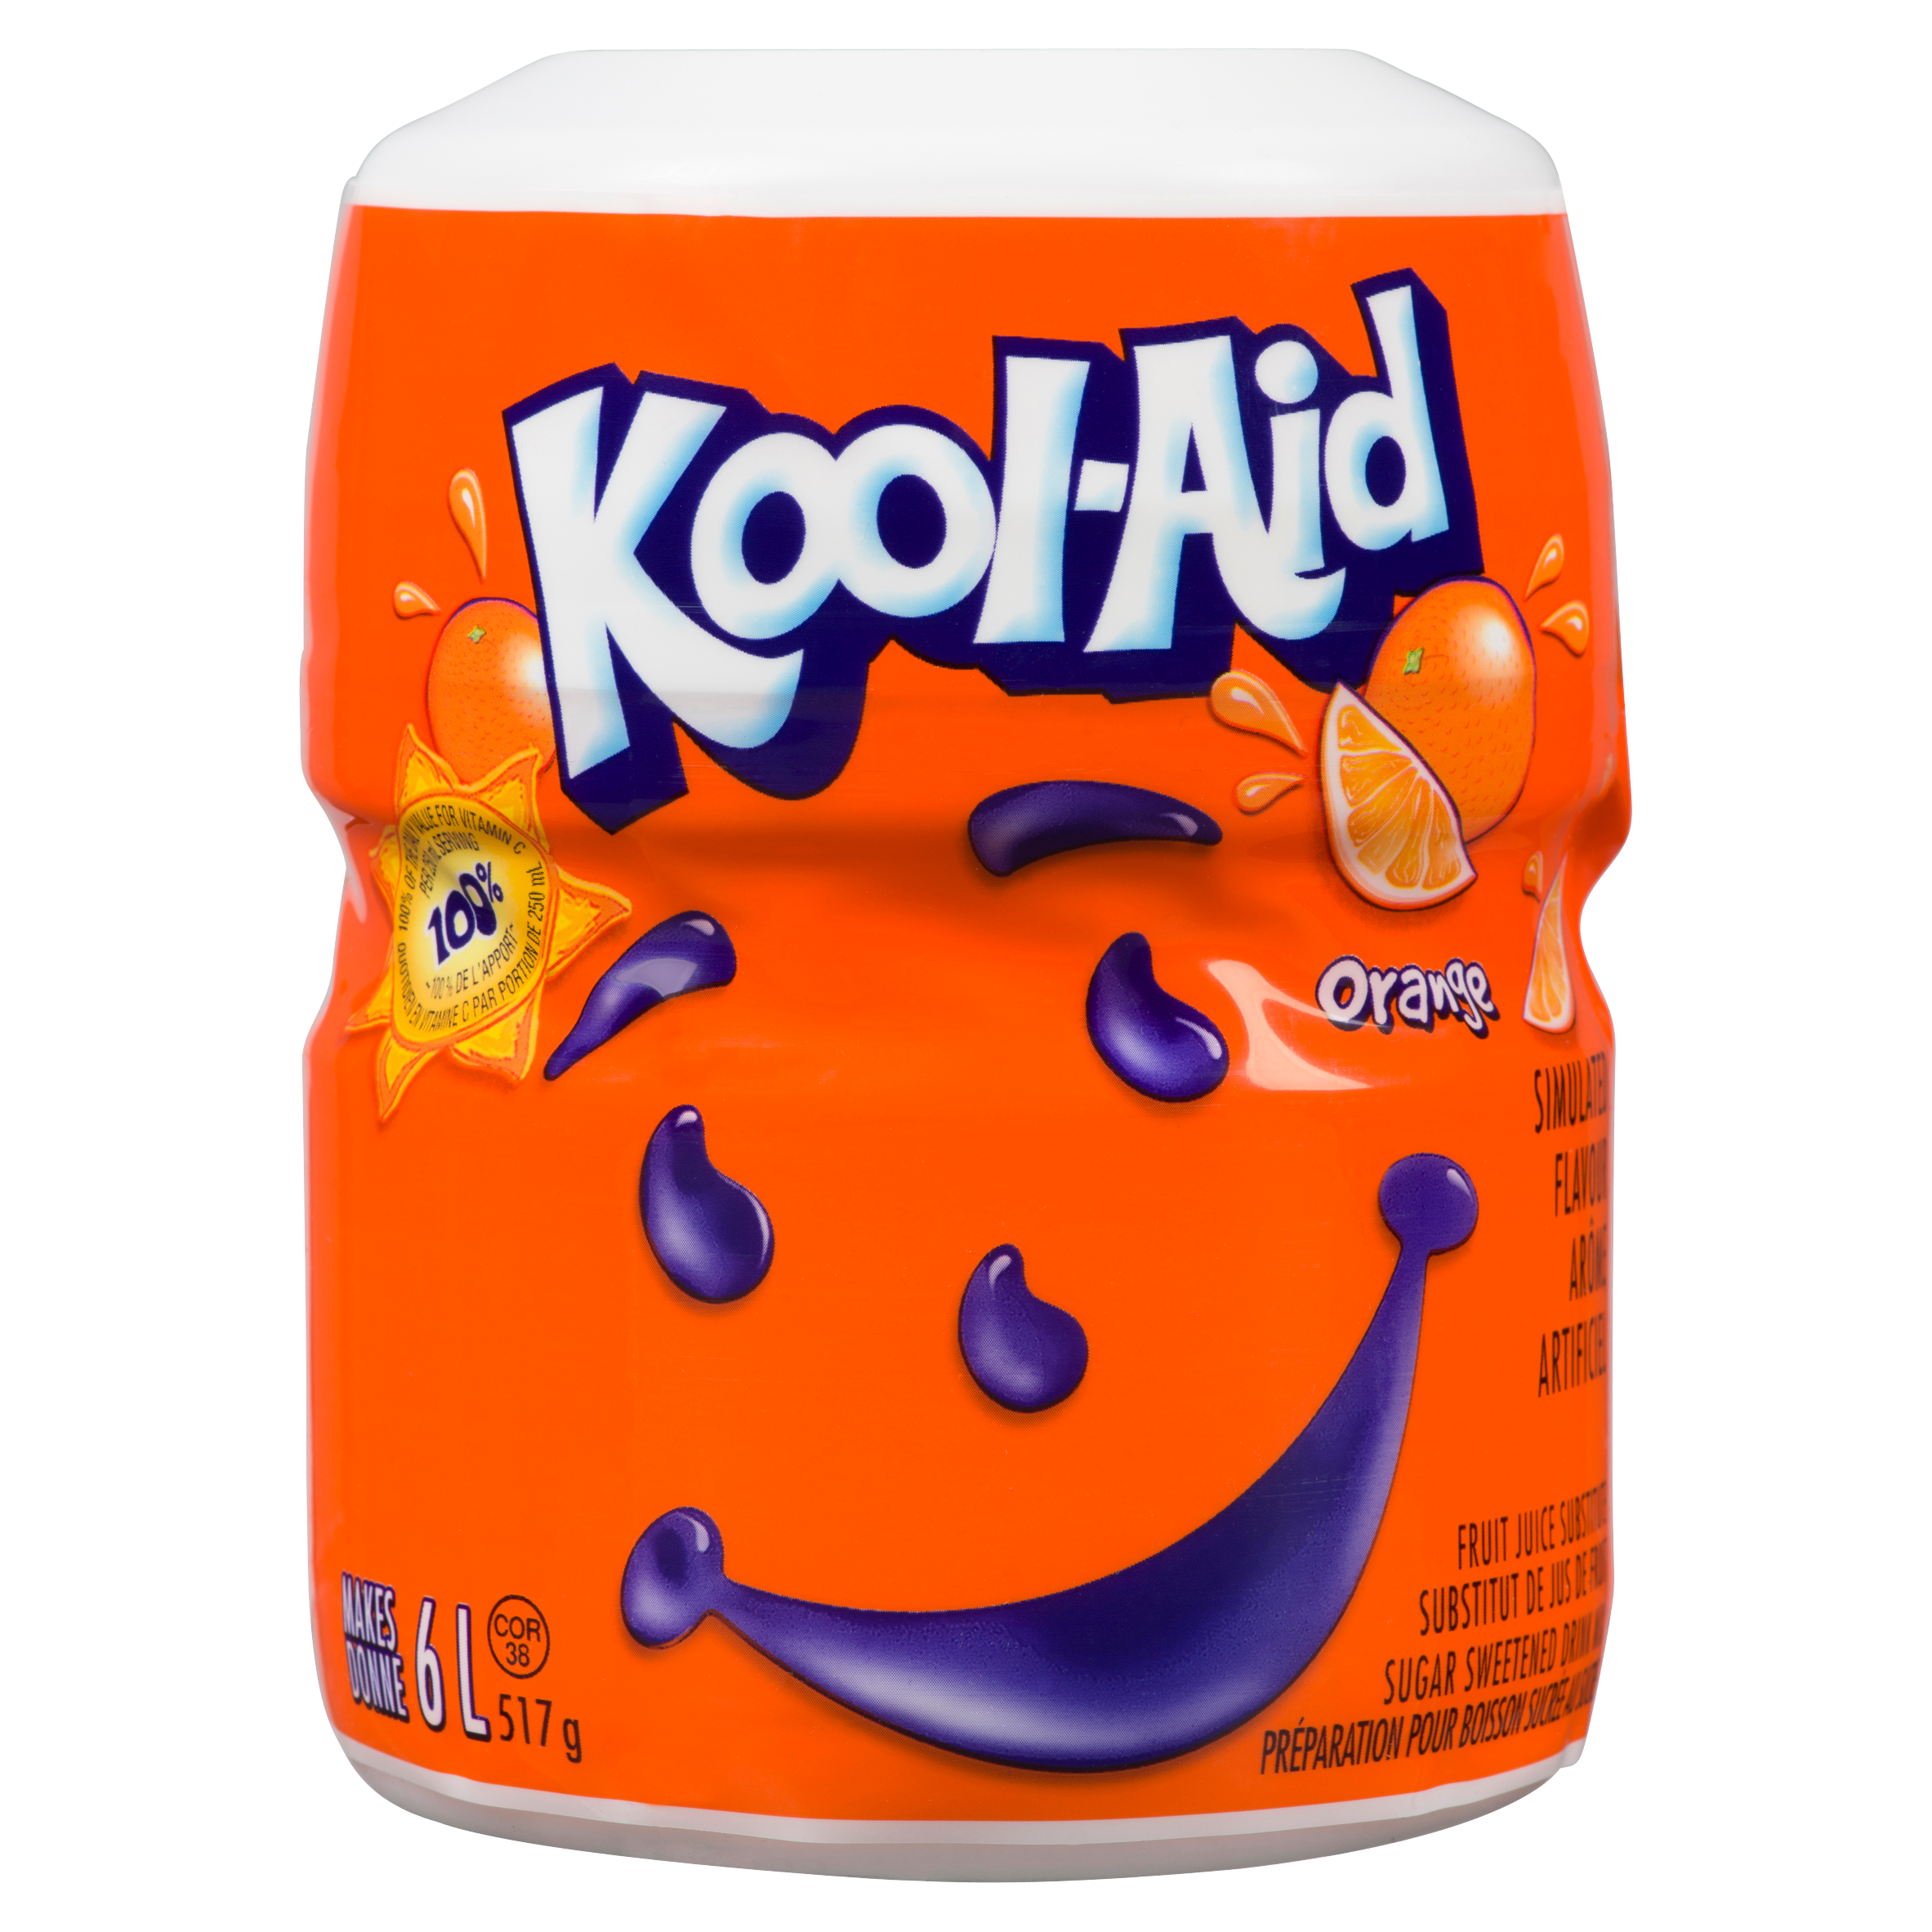 Kraft Kool-Aid Sugar Sweetened Drink Mix Orange (517g)